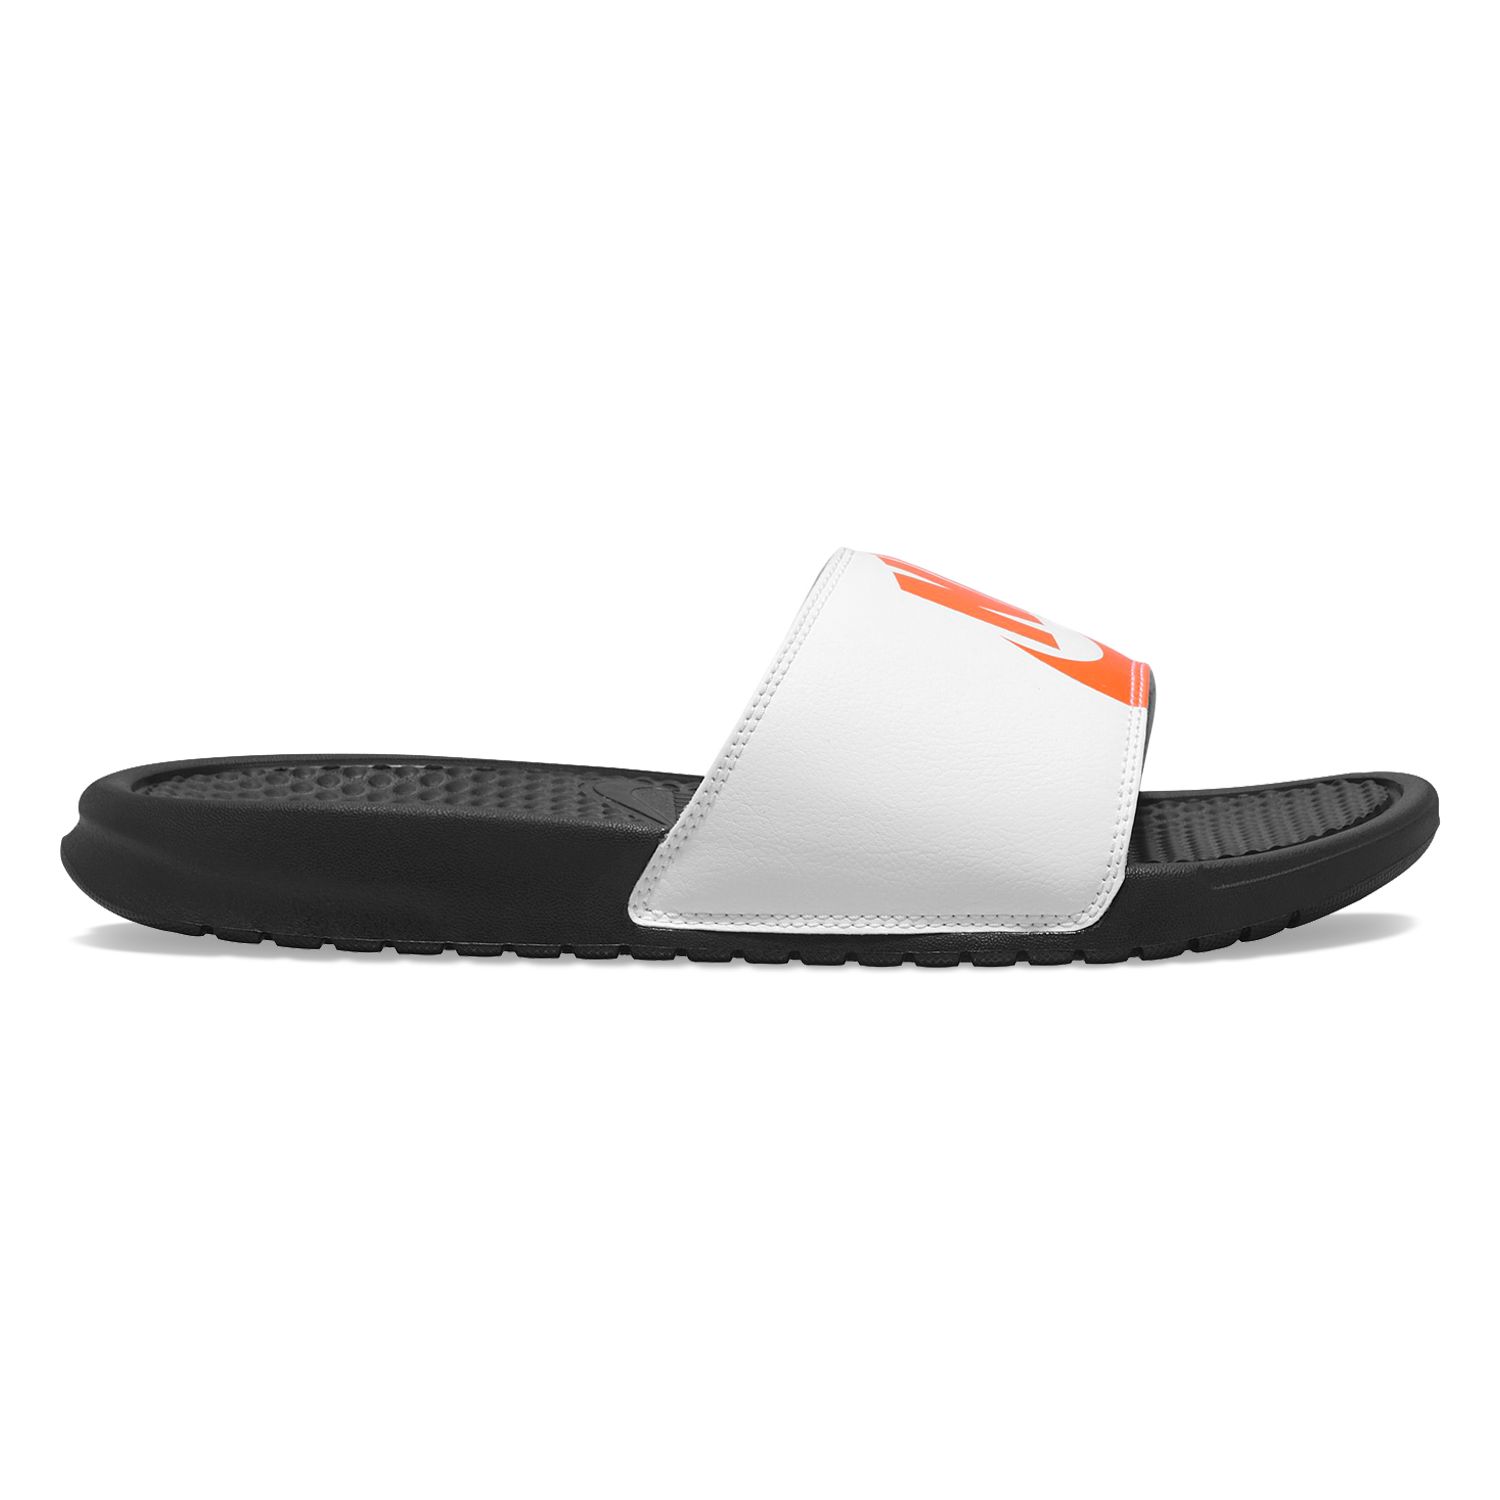 orange nike sandals